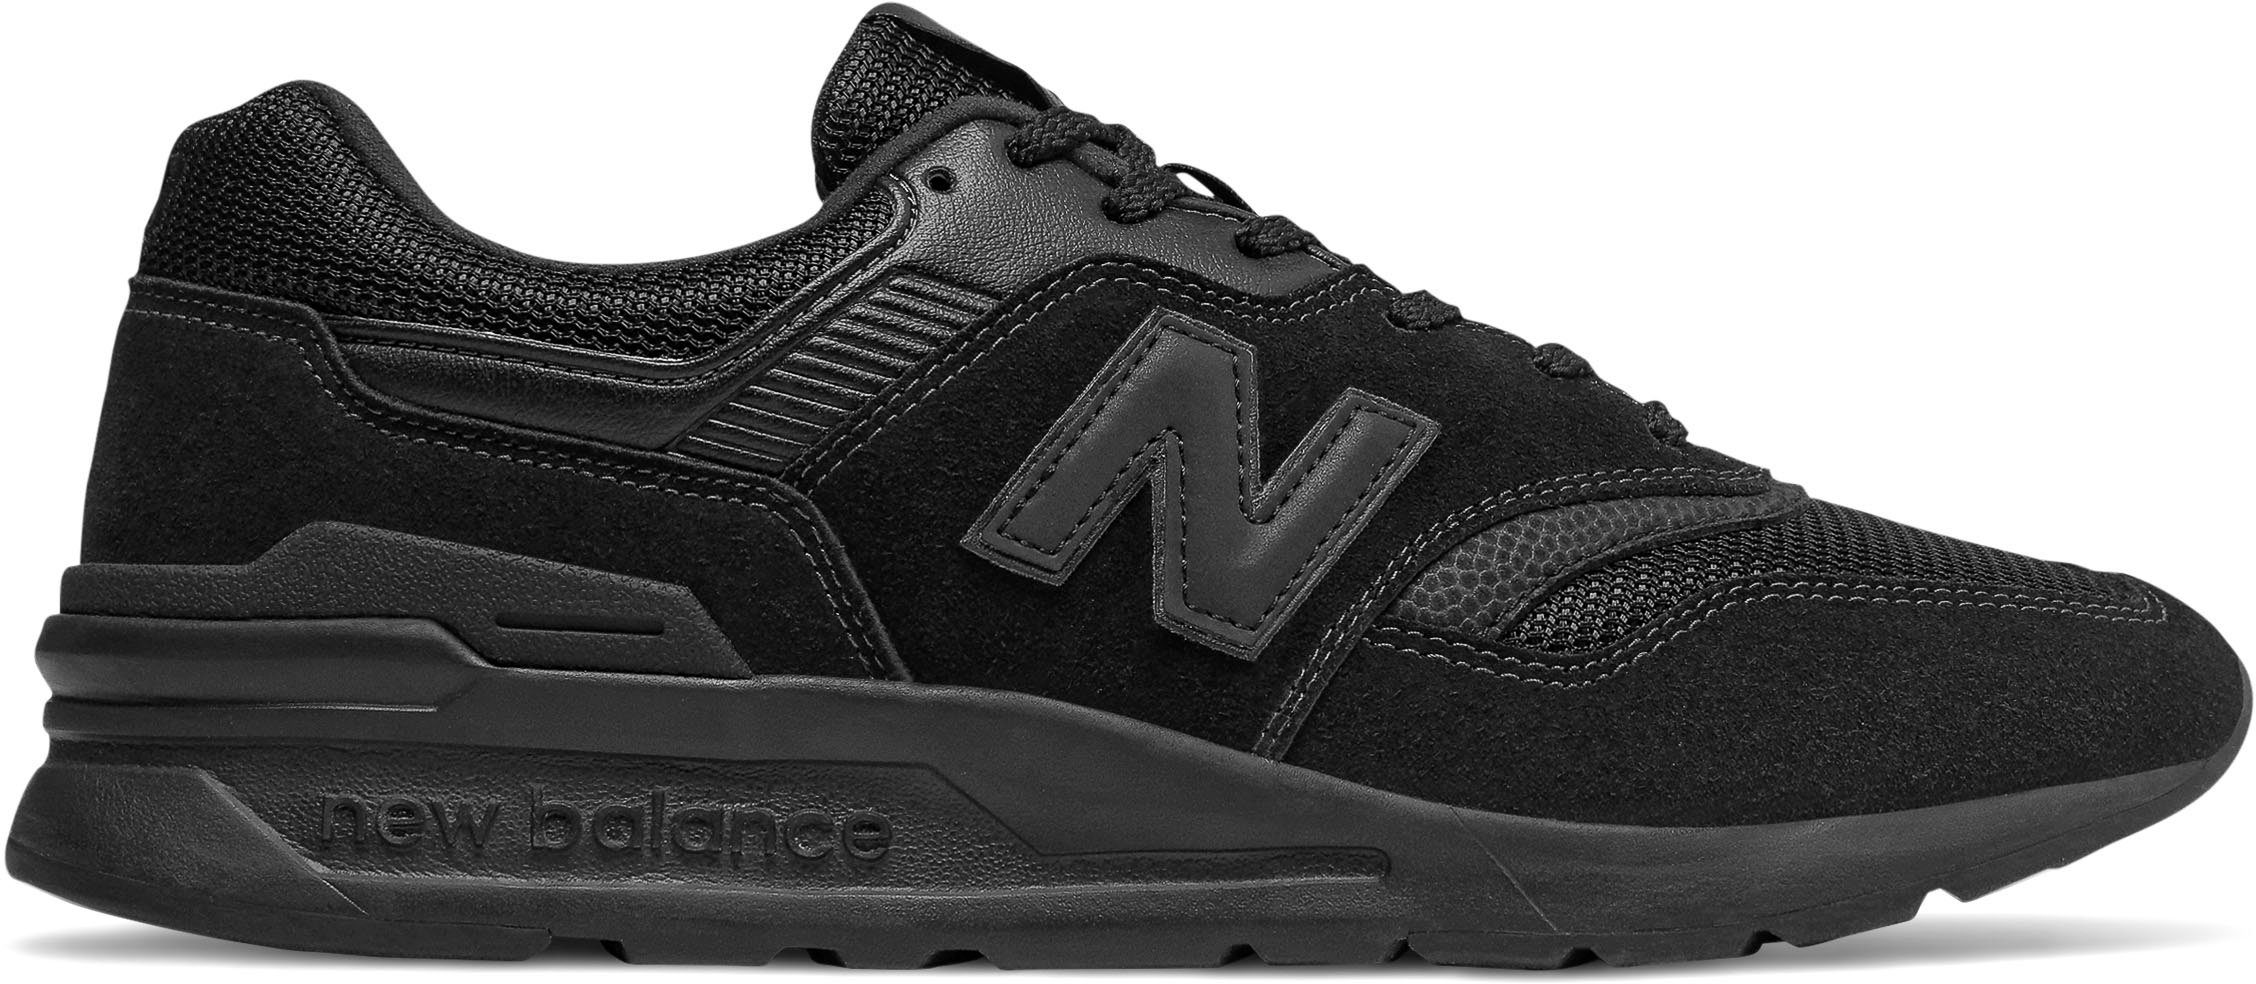 New Balance CM 997 Sneaker schwarz